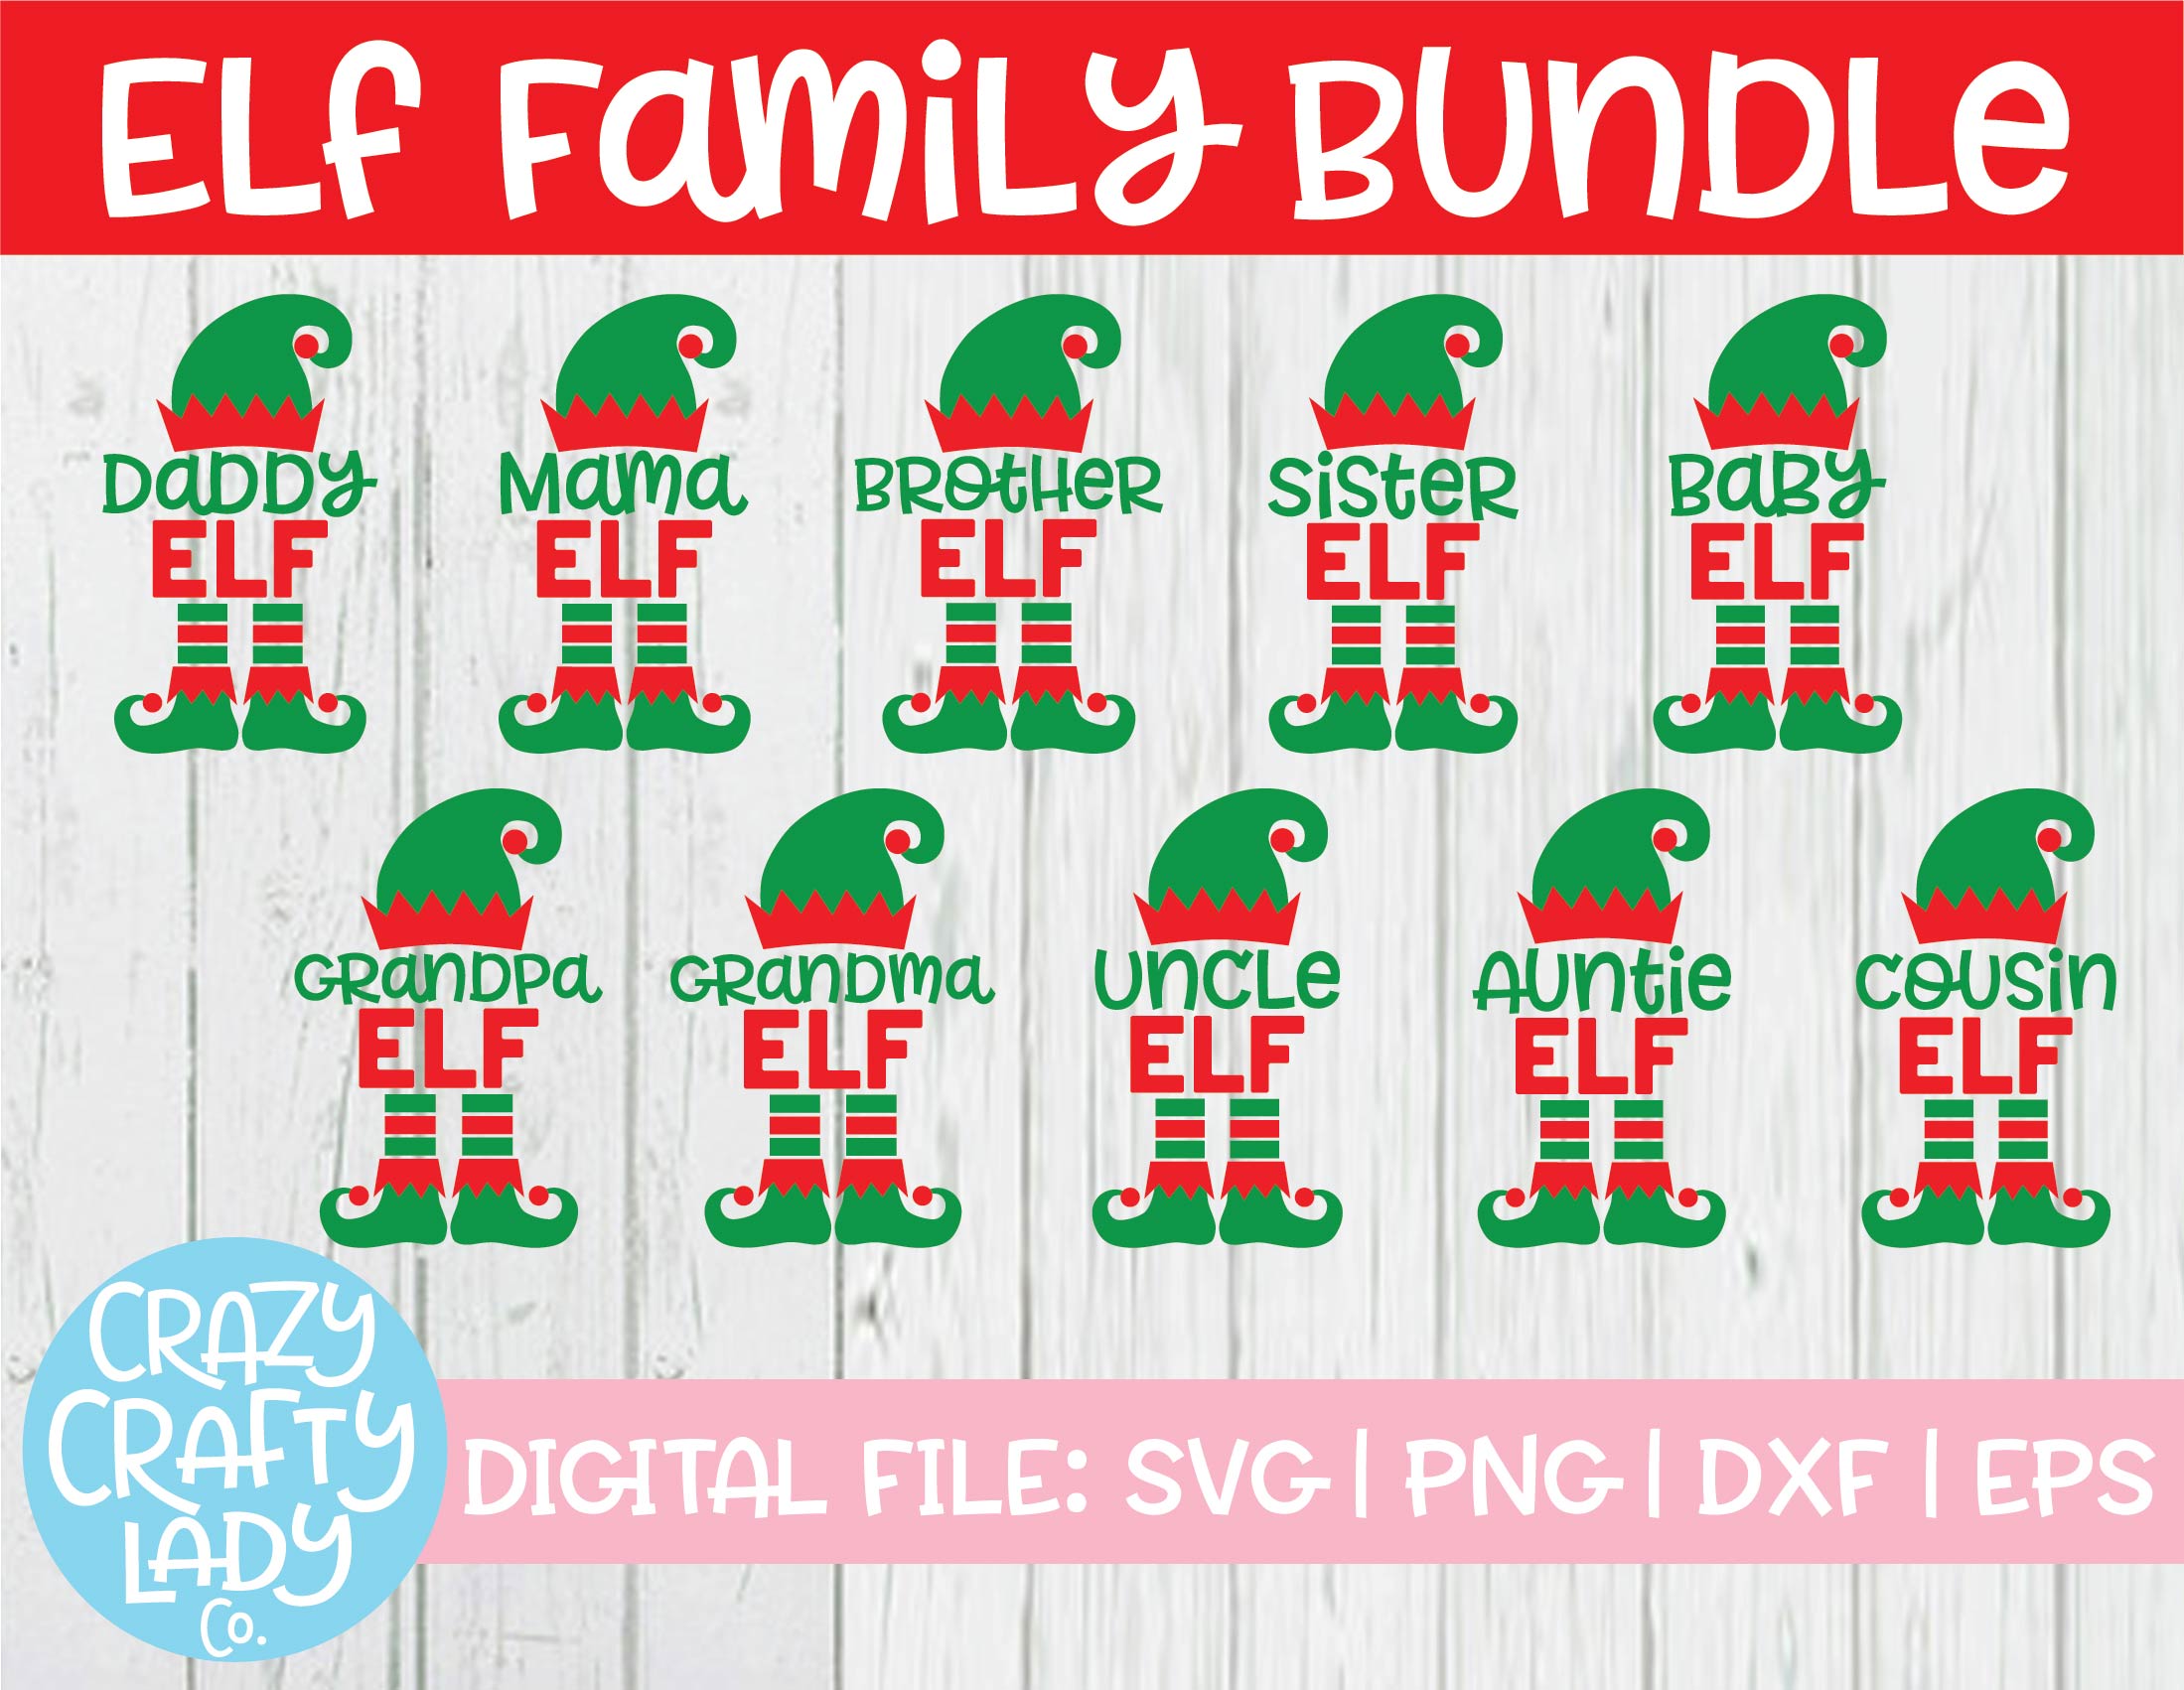 Download Elf Family Svg Cut File Bundle Crazy Crafty Lady Co